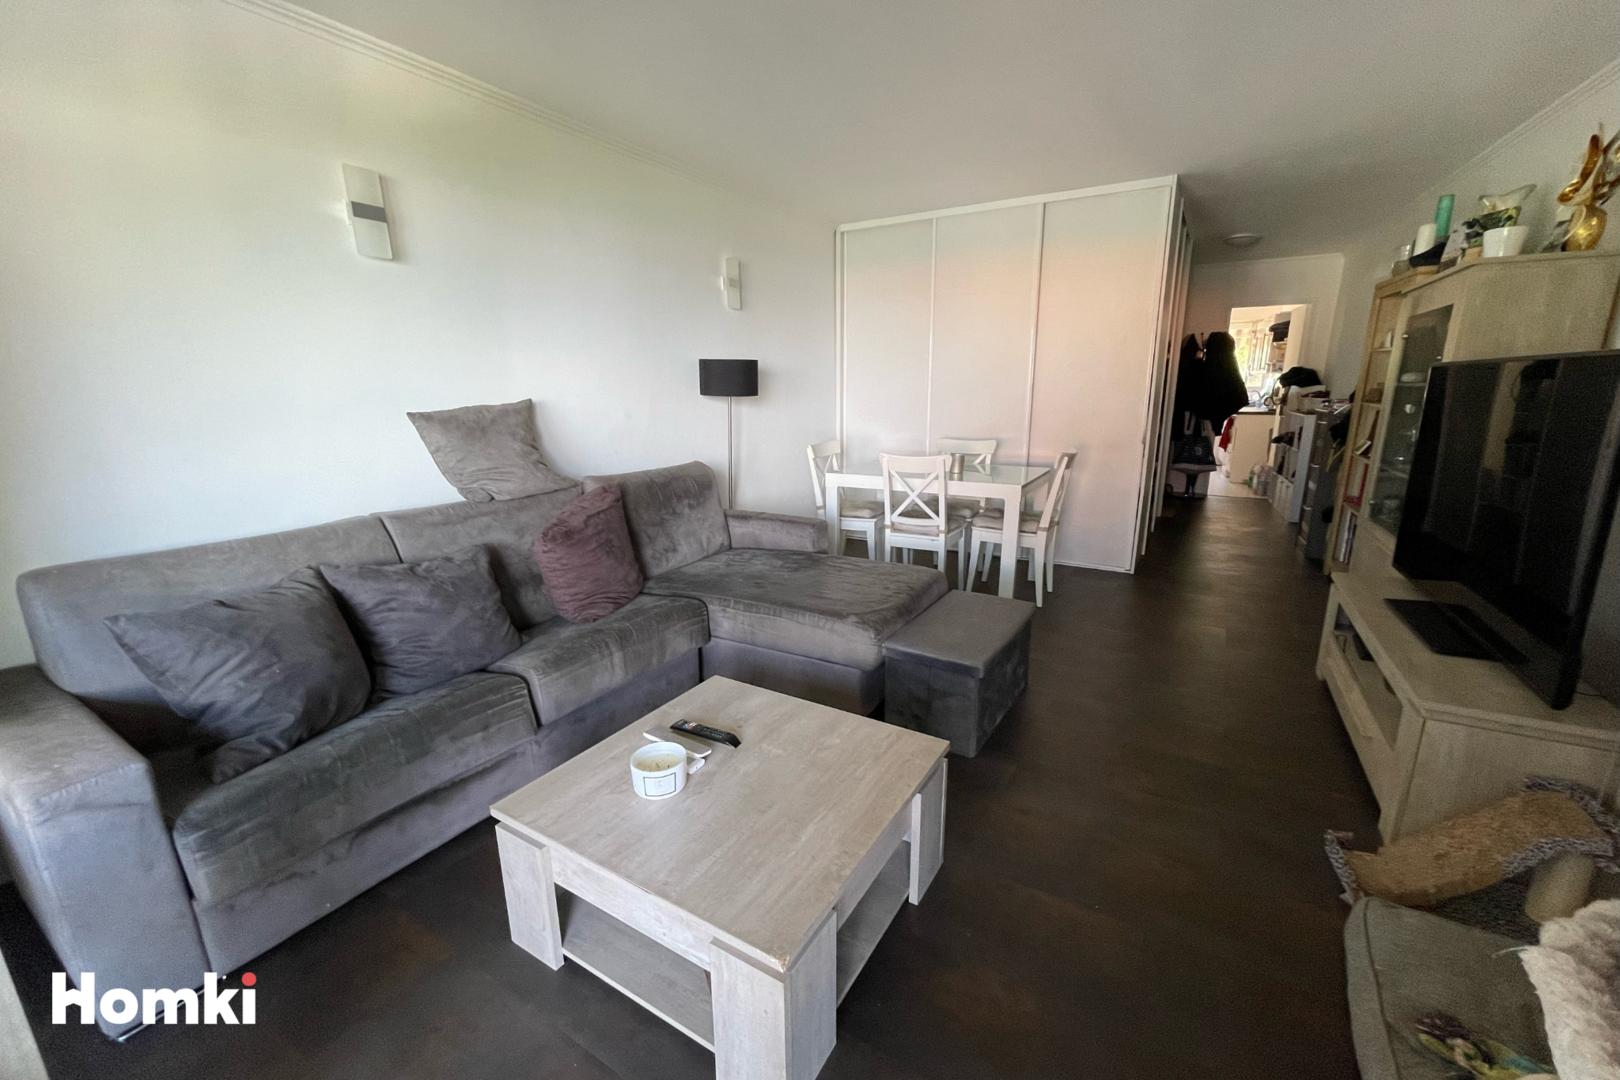 Homki - Vente Appartement  de 67.0 m² à Roquebrune-Cap-Martin 06190